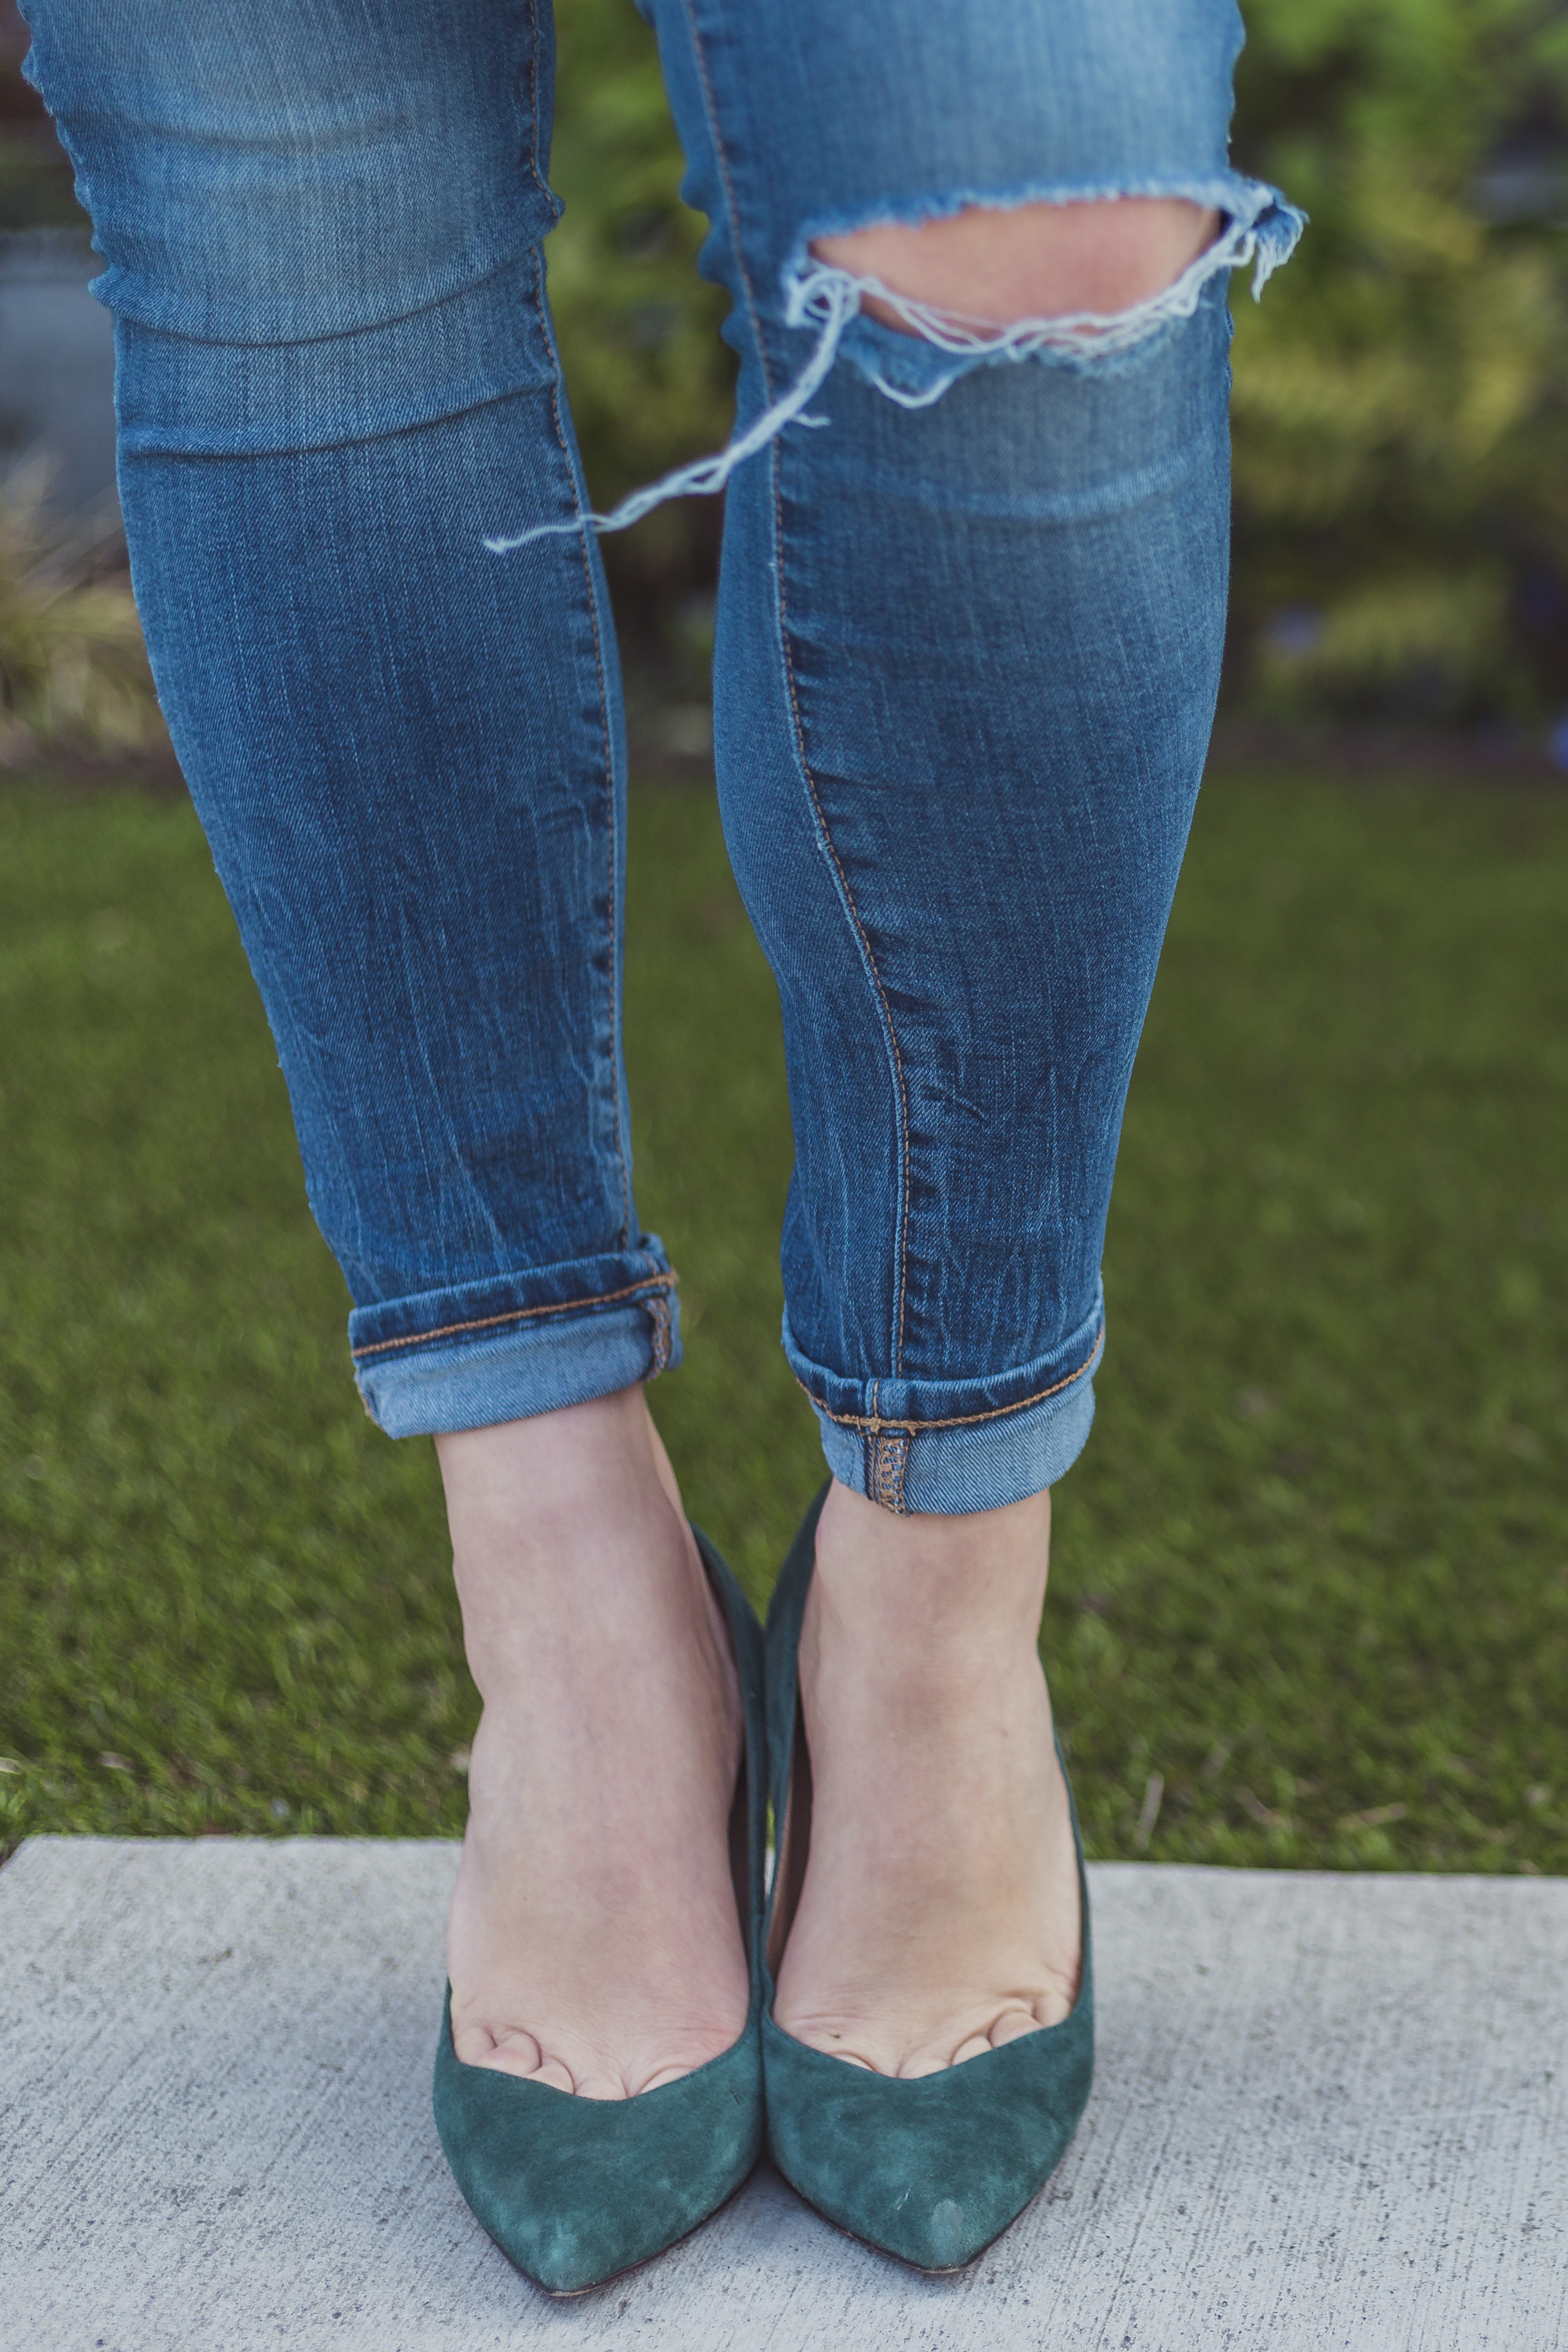 Banana Republic Heels Womens 6.5 Casual Slip On Dorsay Pumps Gray Leather  Wedge | eBay